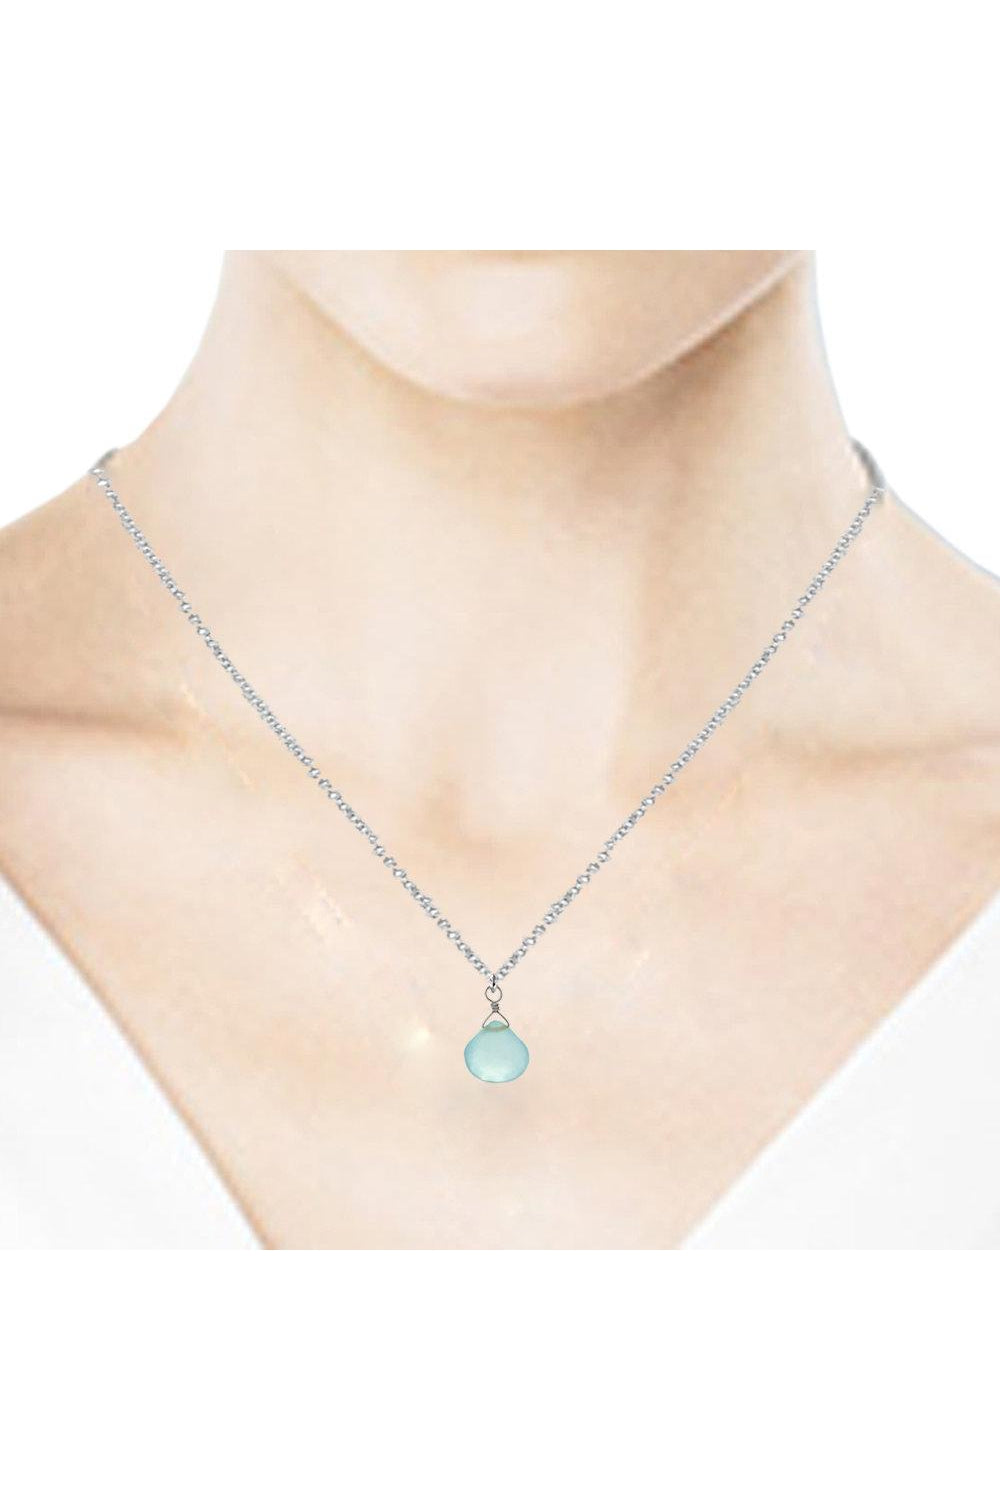 Blue Chalcedony Dainty Gemtone Silver Necklace